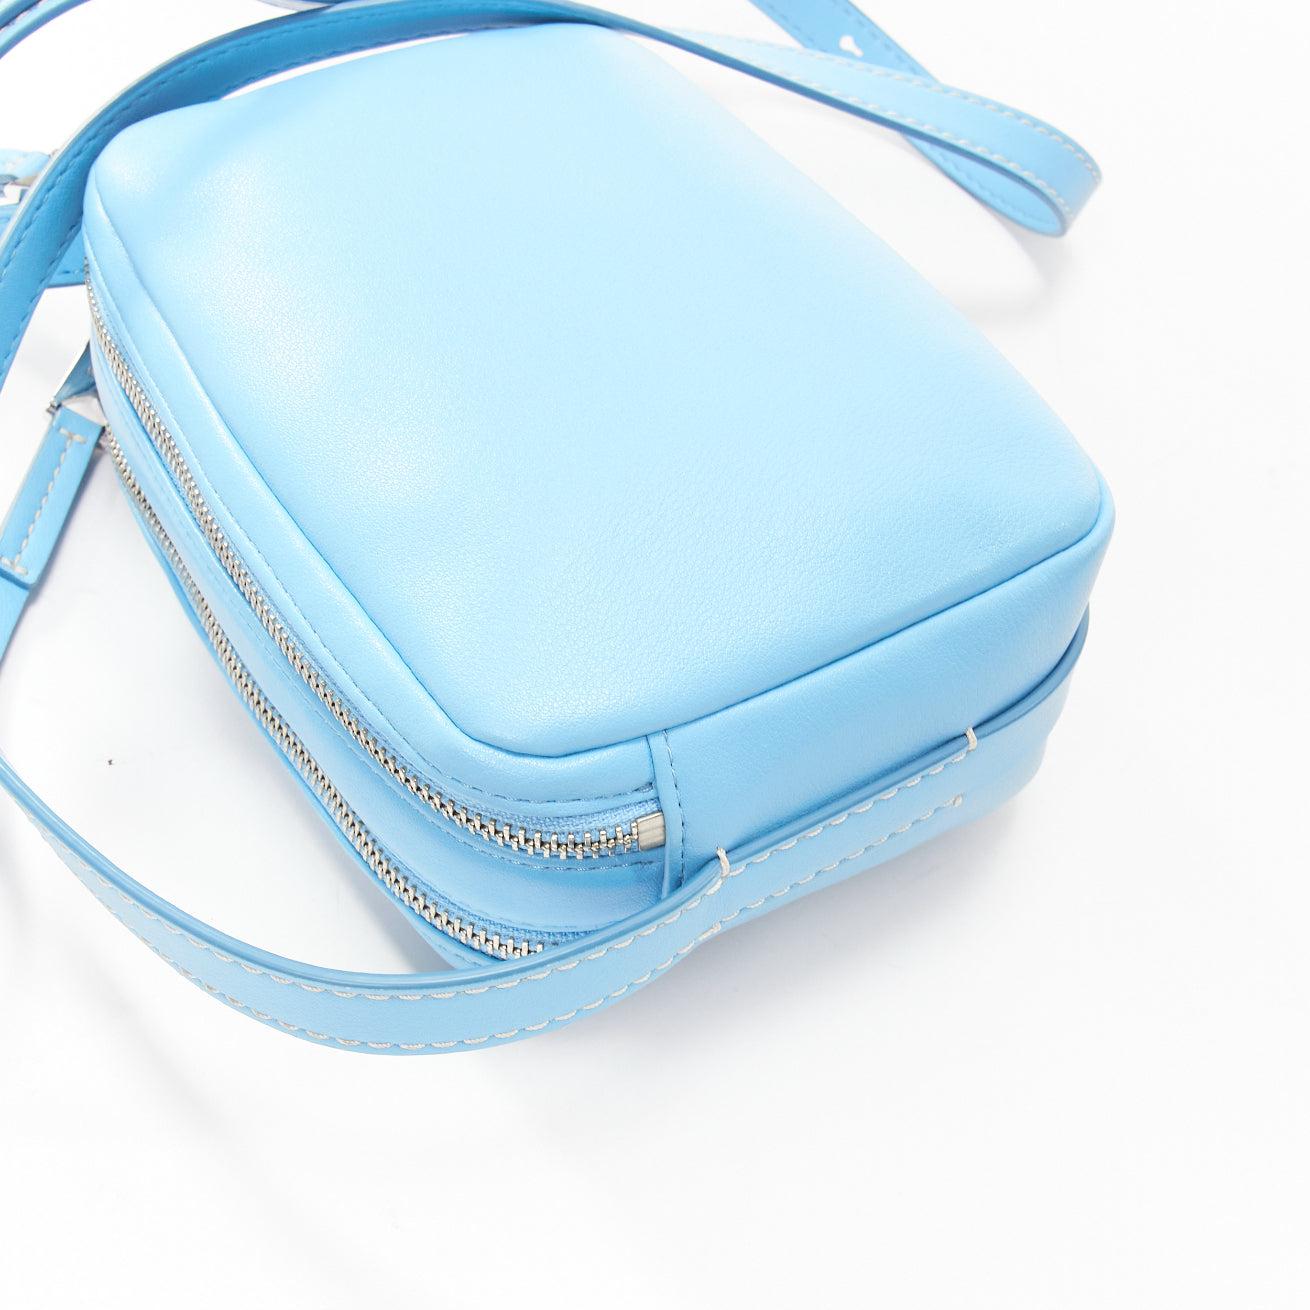 PROENZA SCHOULER White Label blue leather silver zipper crossbody camera bag For Sale 4